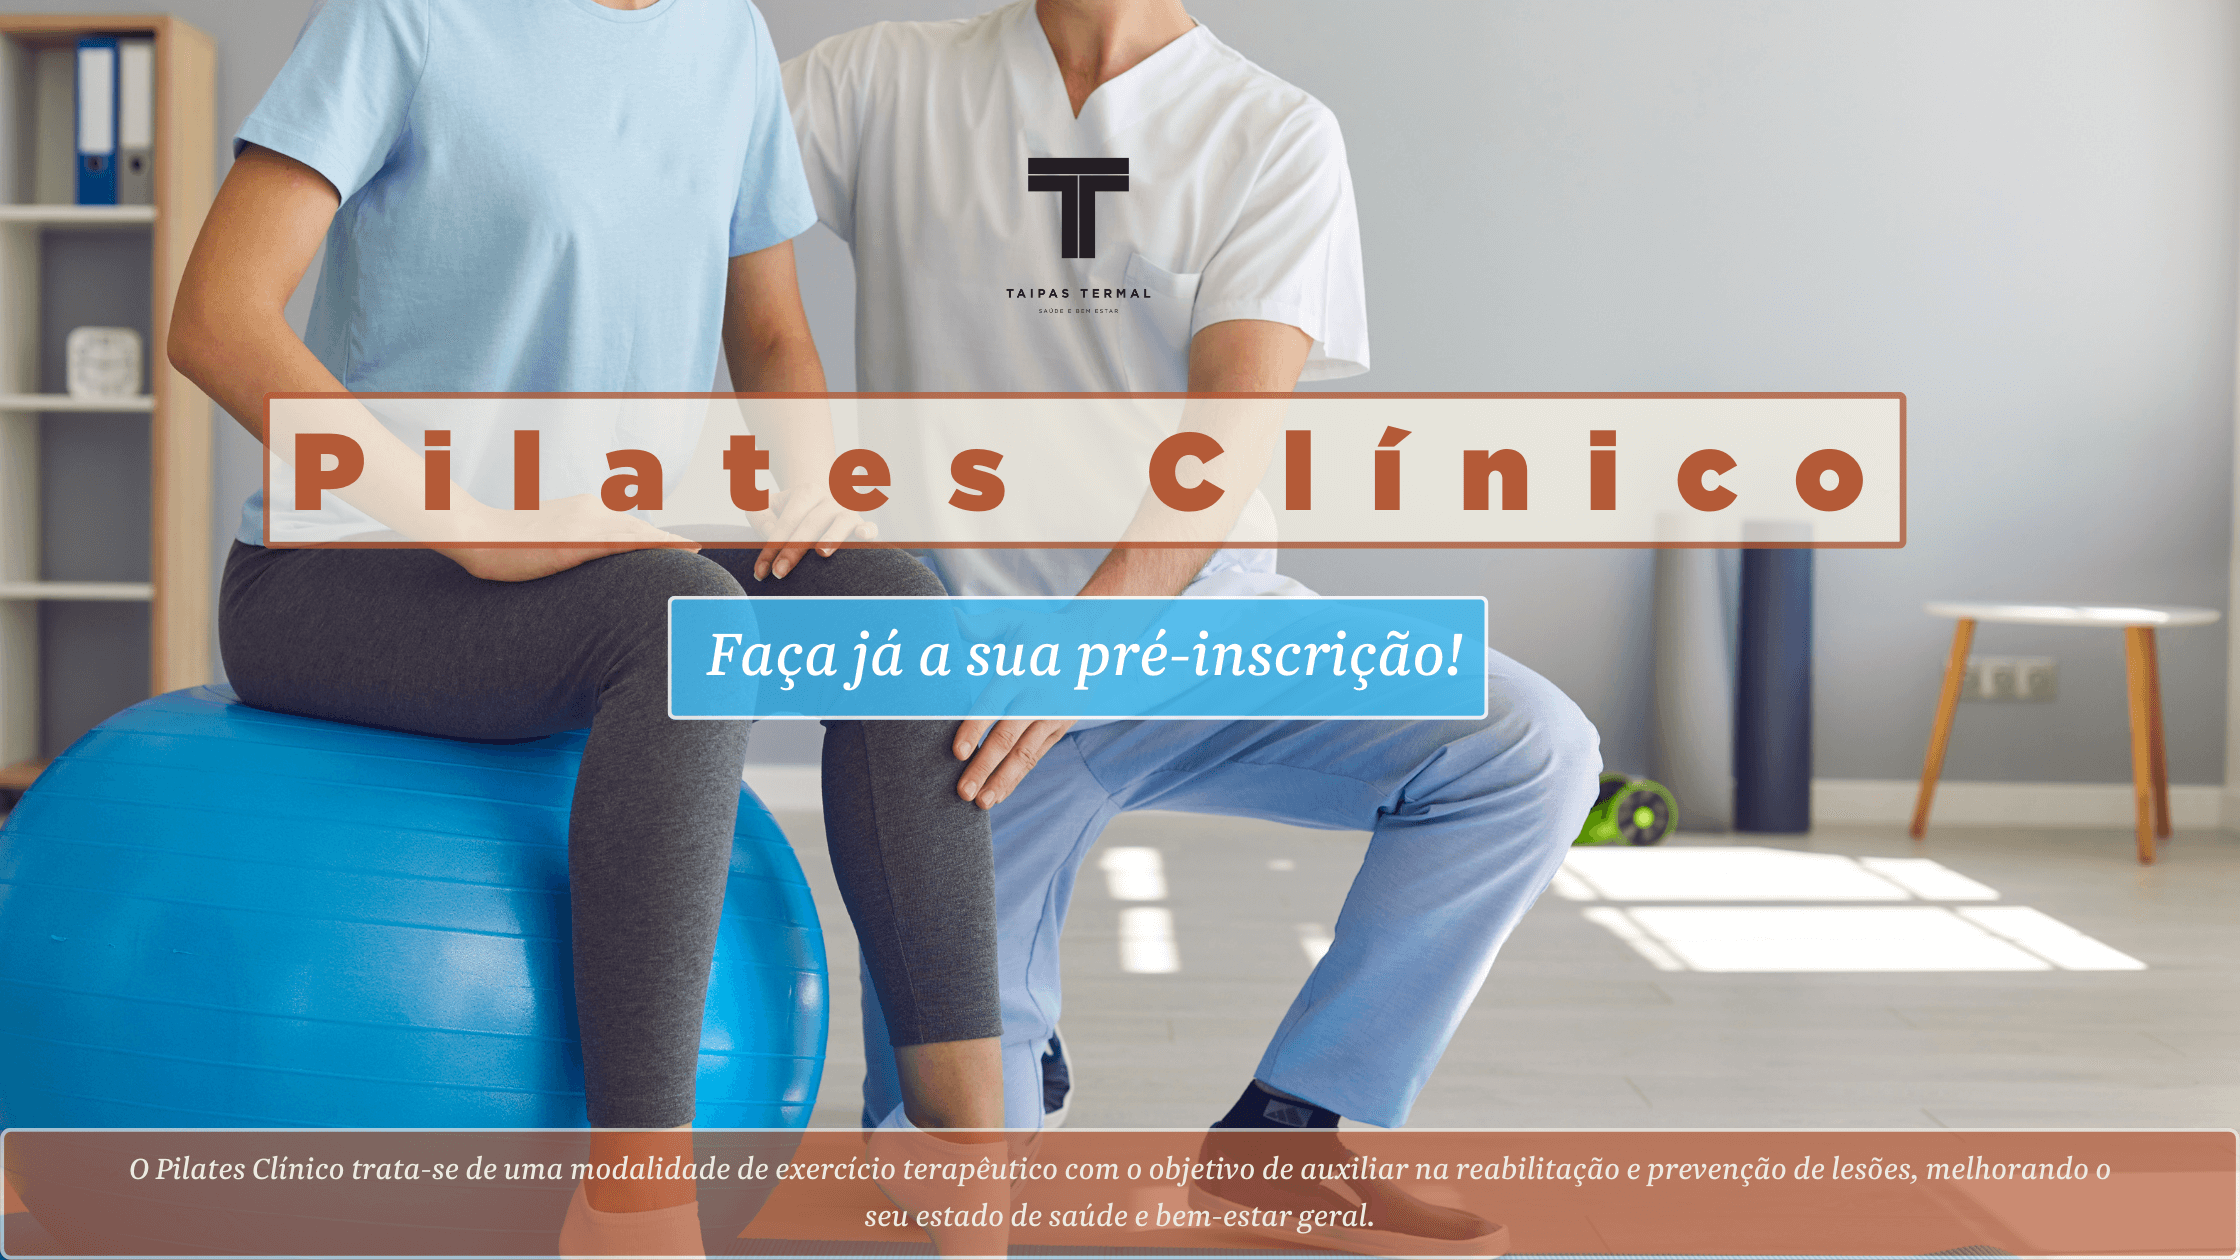 Pilates clinico